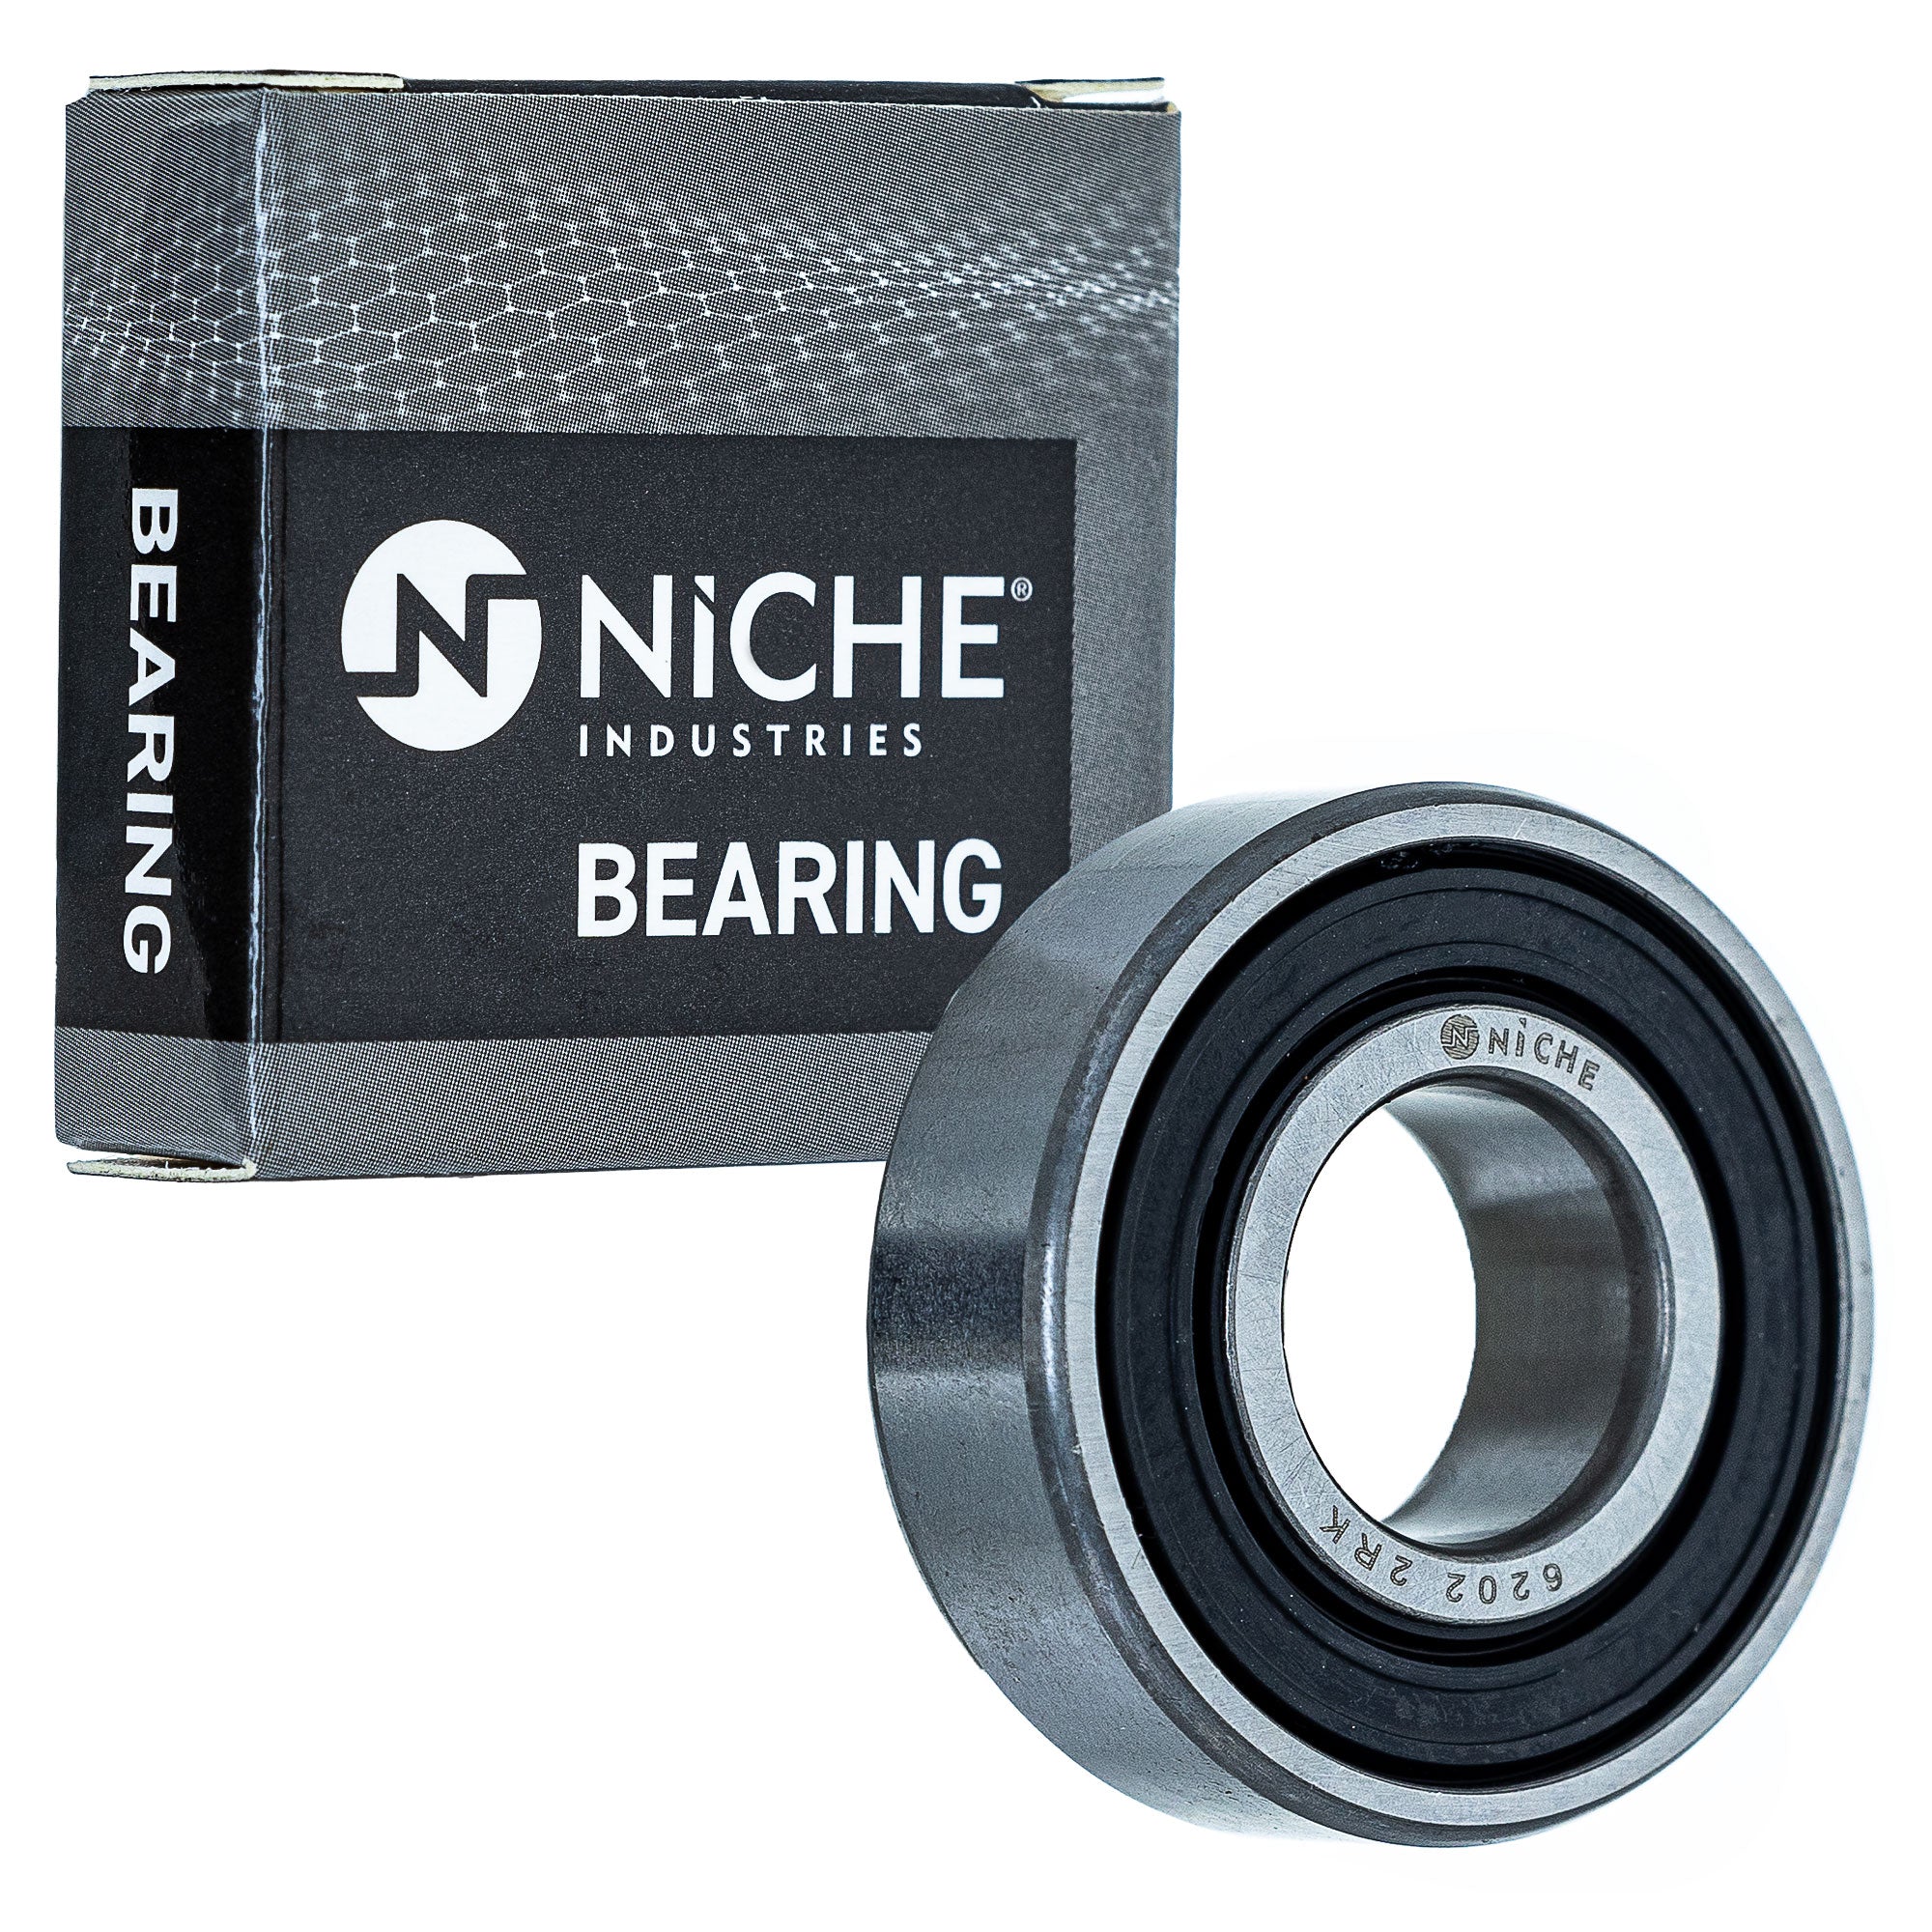 NICHE Bearing 10-Pack